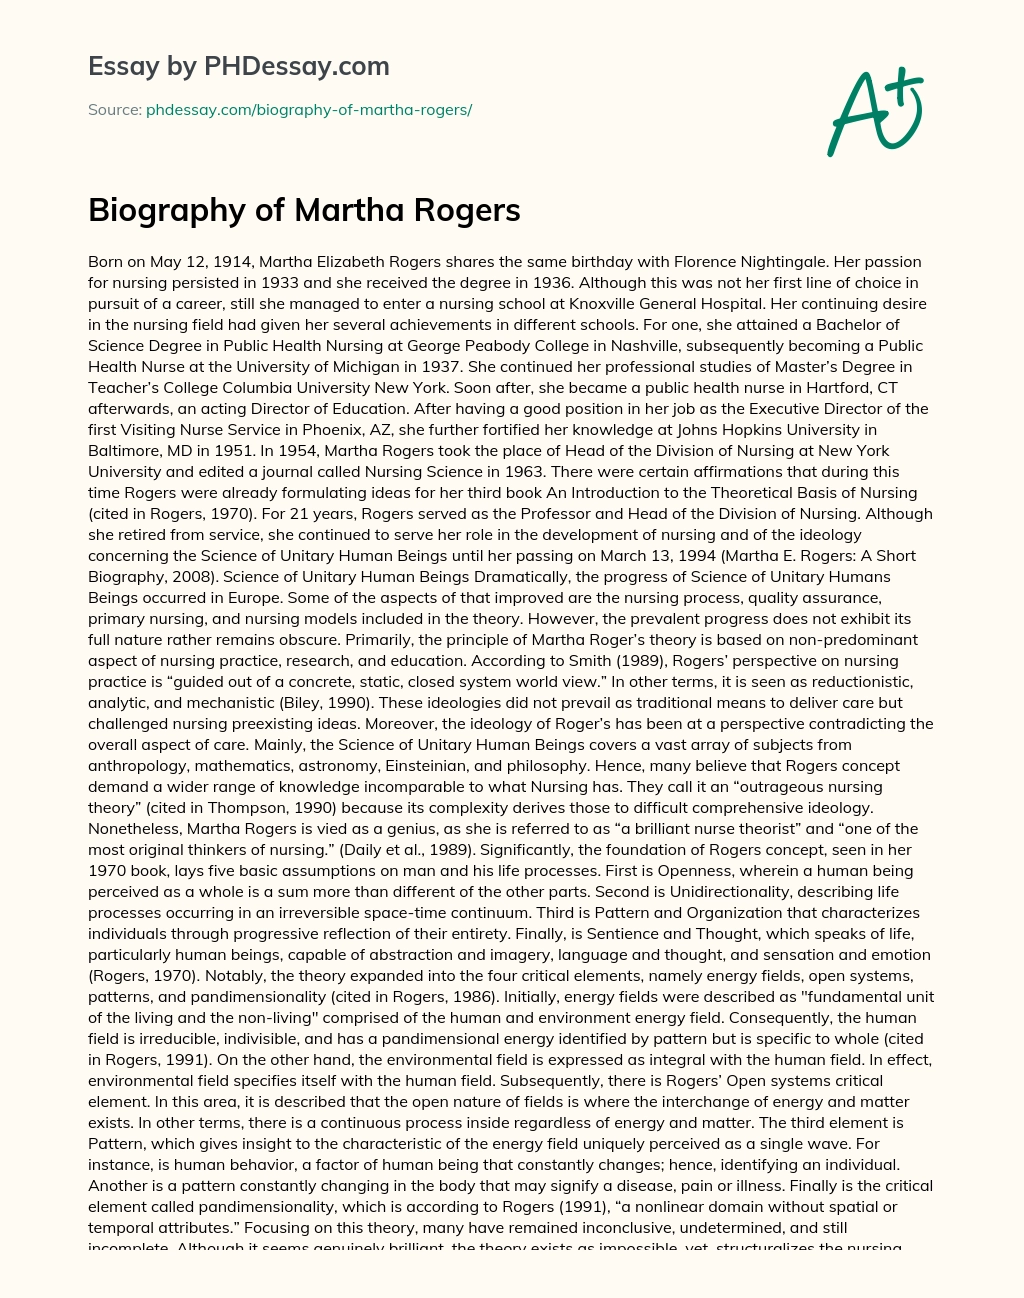 Biography of Martha Rogers essay